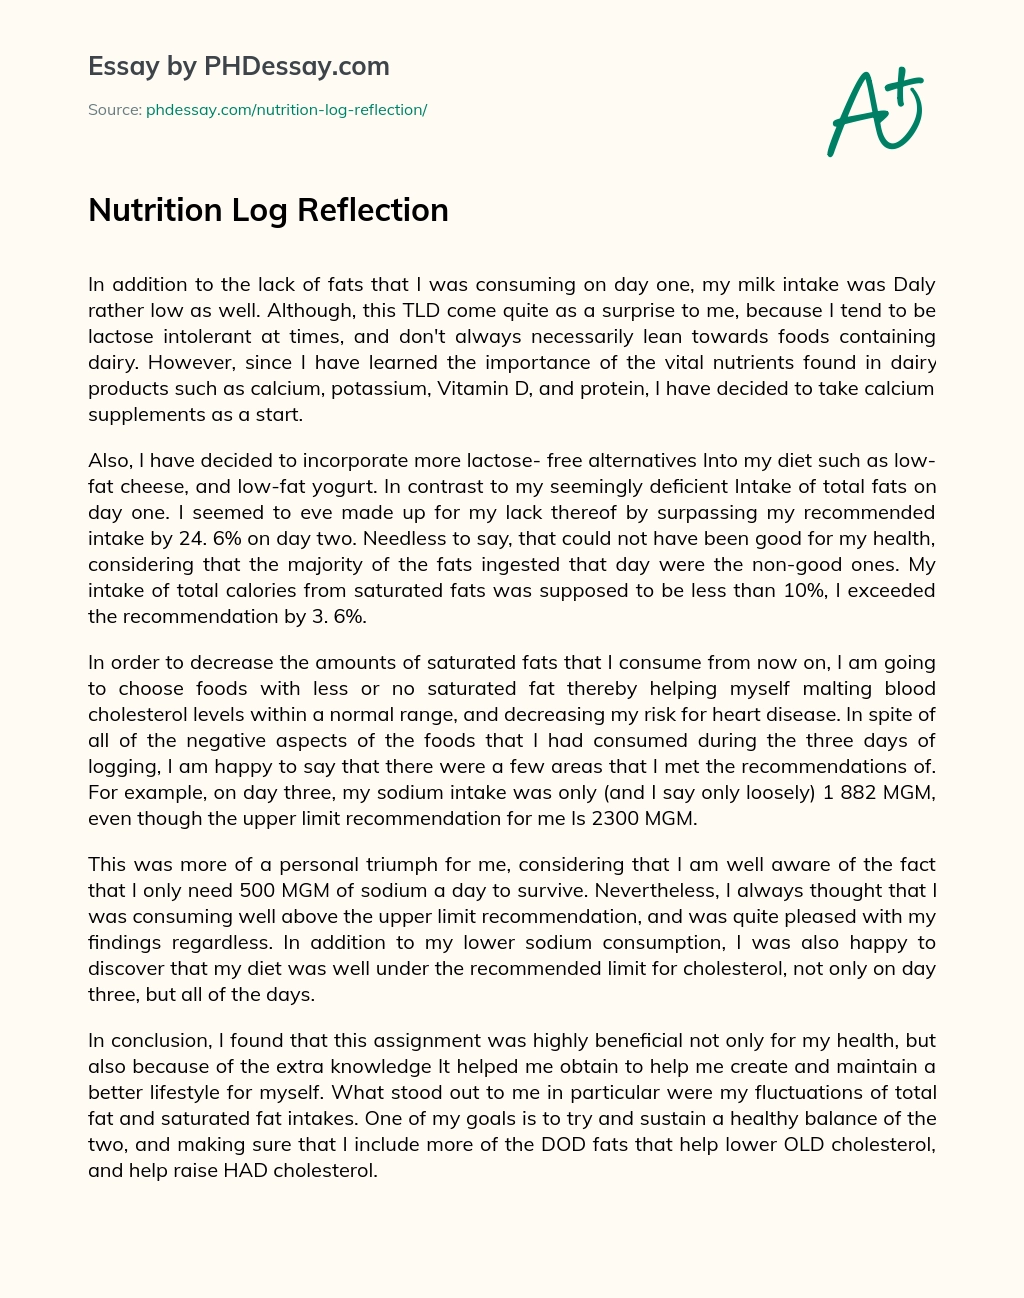 Nutrition Log Reflection essay